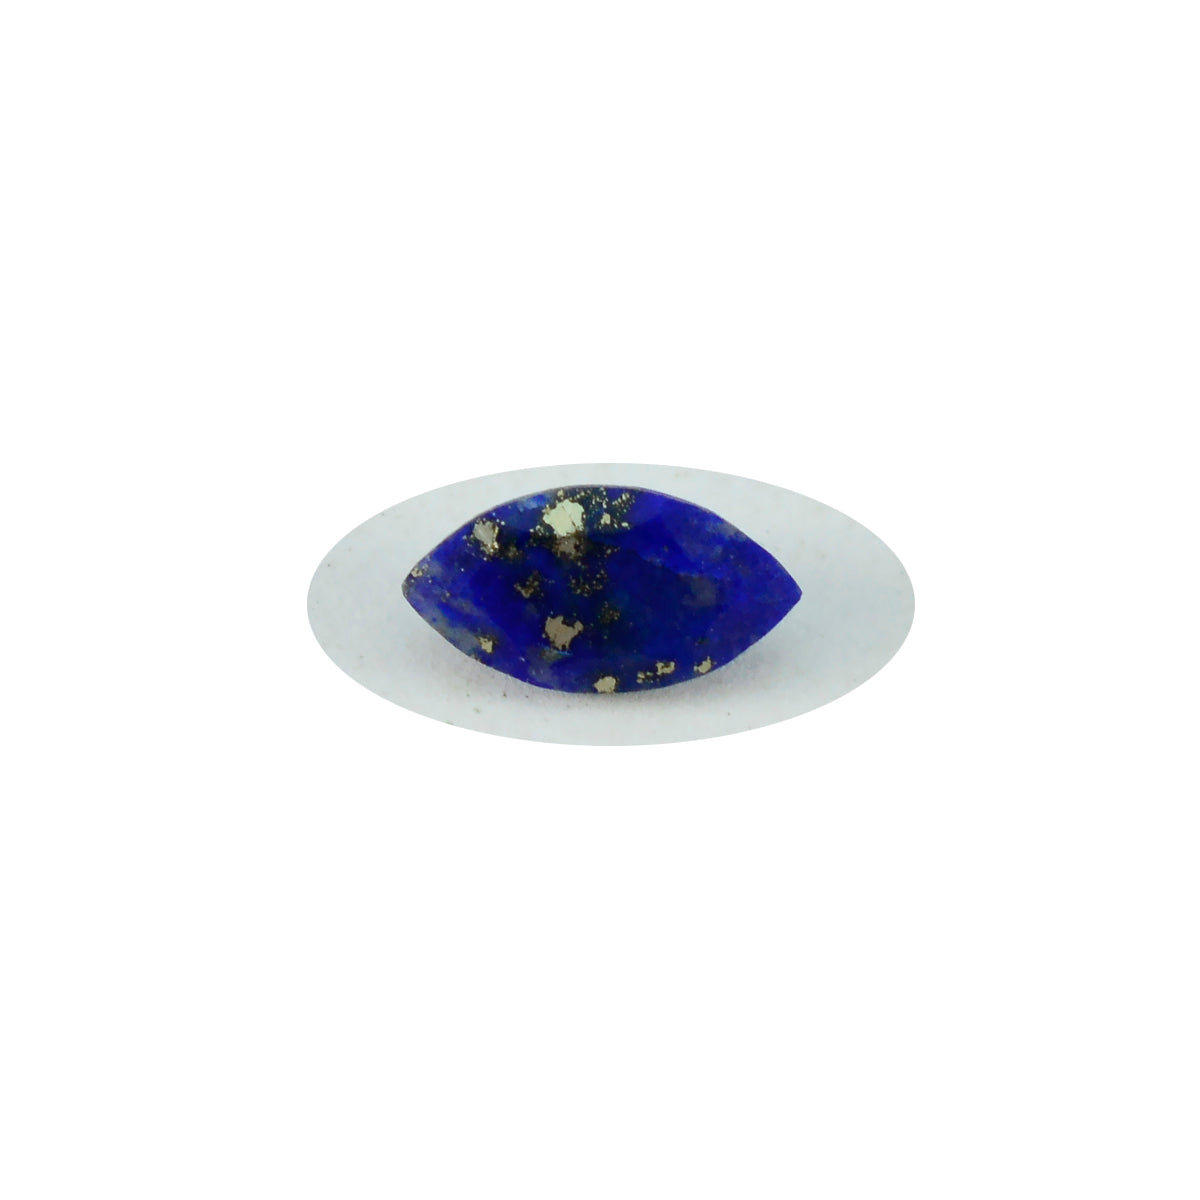 riyogems 1pc リアル ブルー ラピスラズリ ファセット 6x12 mm マーキス シェイプ a+ 品質の宝石